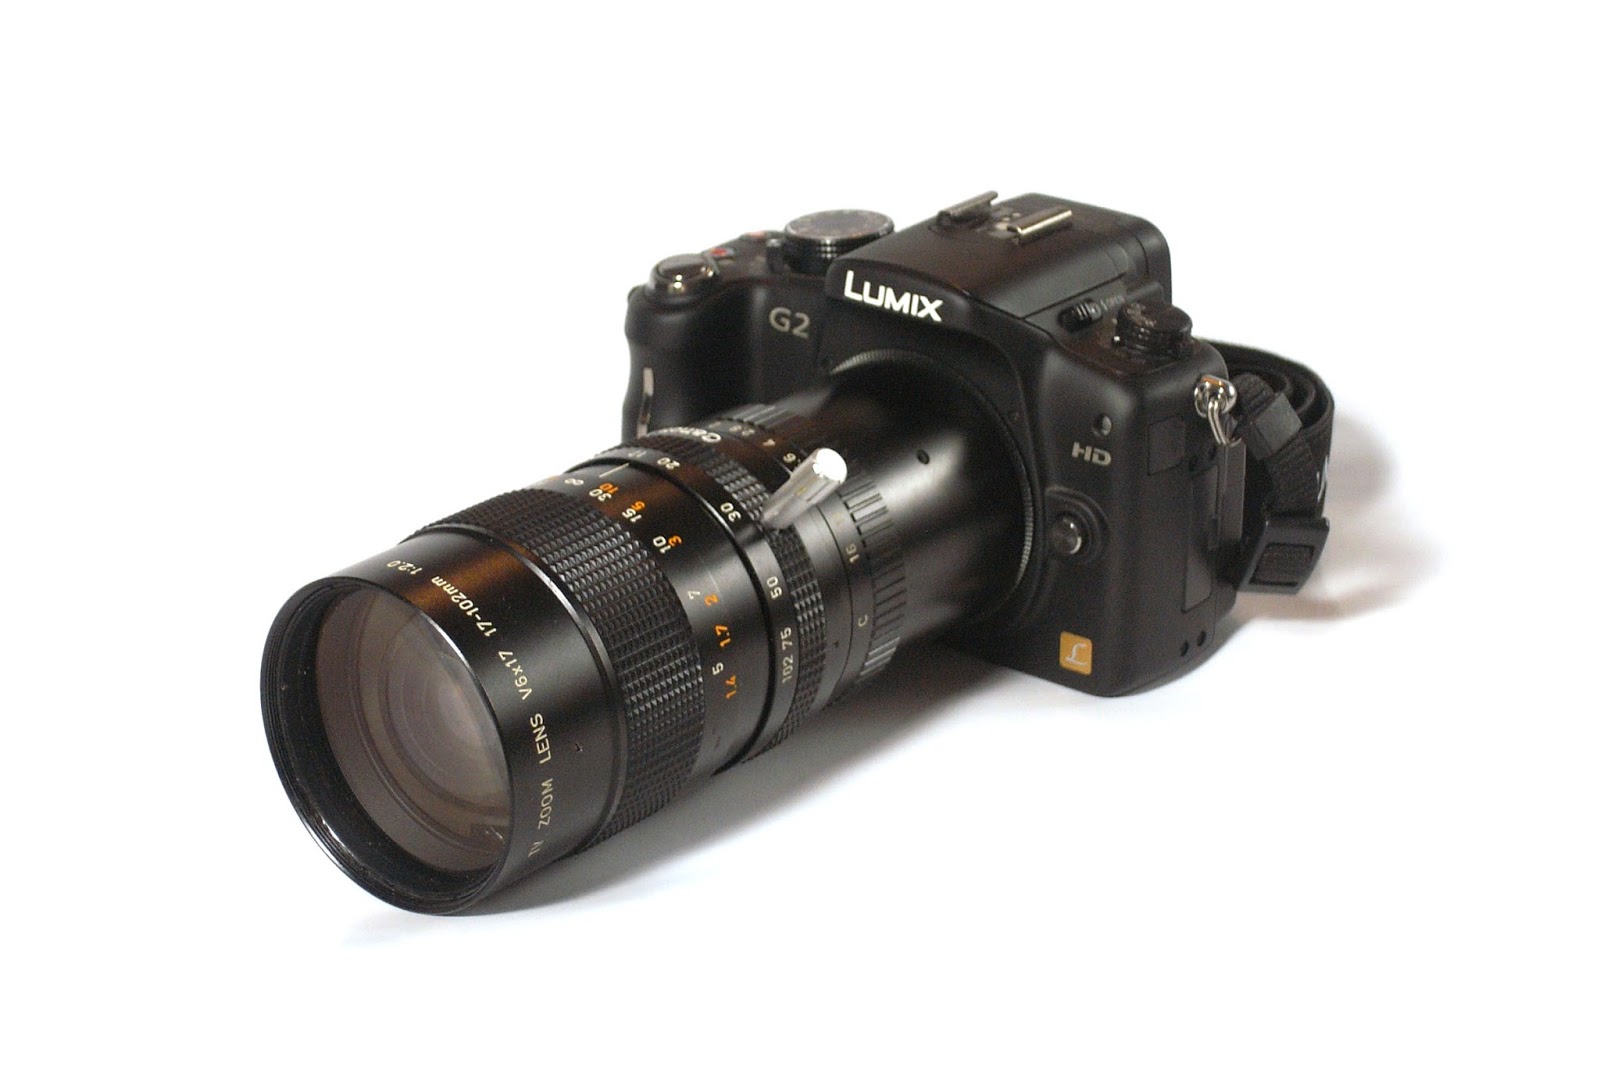 Canon V6x17 17-102/2.0 mounted on Lumix G2 Micro Four Thirds (M4/3, MFT) camera.